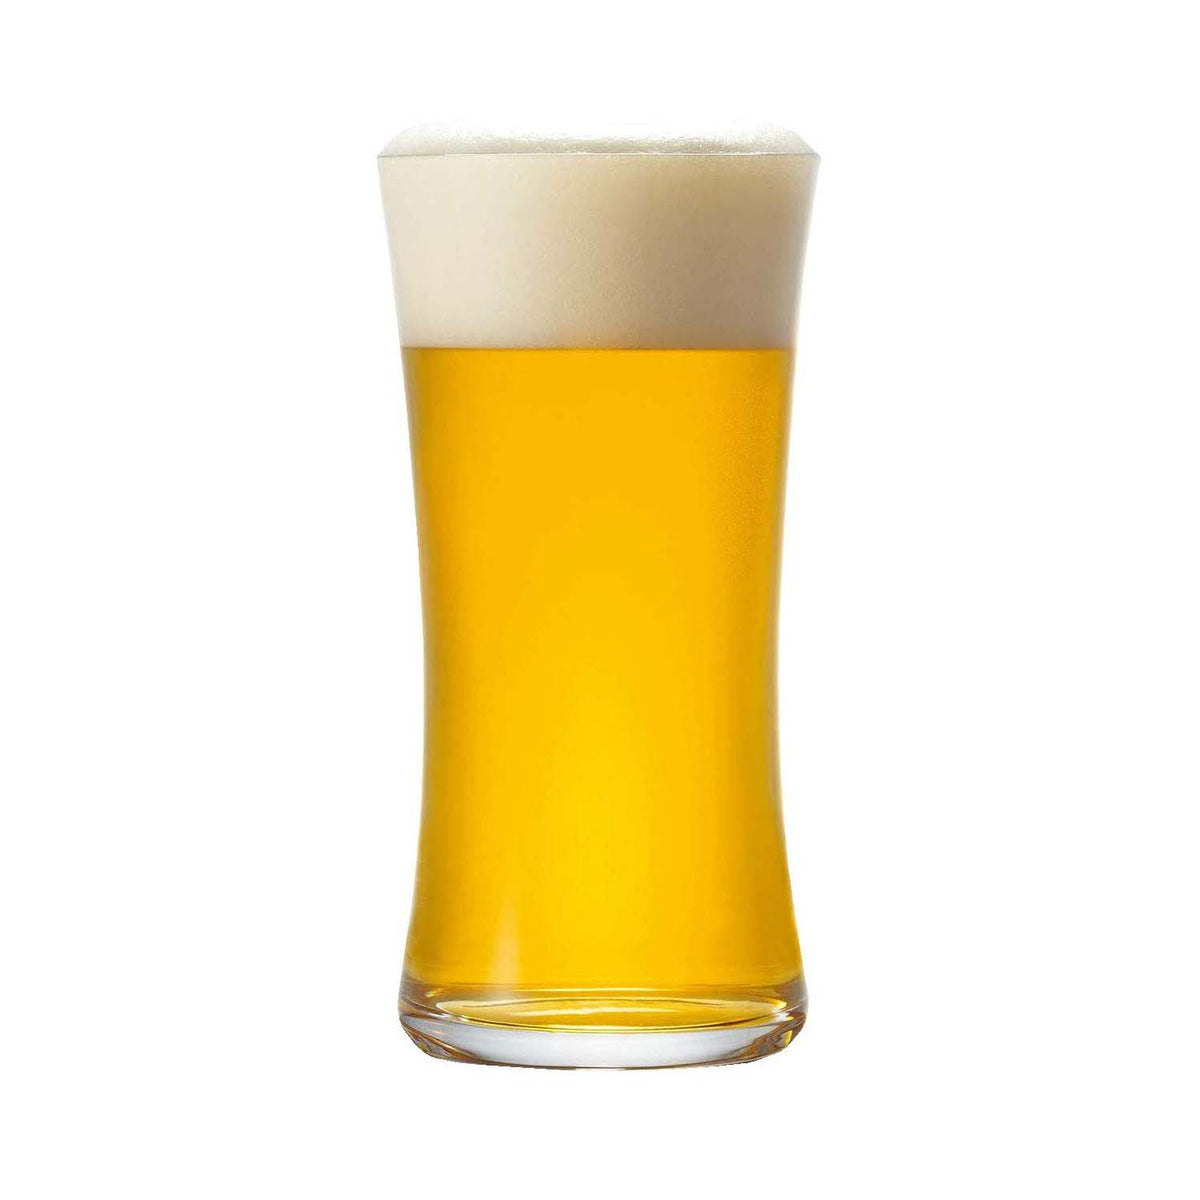 ADERIA Craft Beer Glass for Refreshing Taste